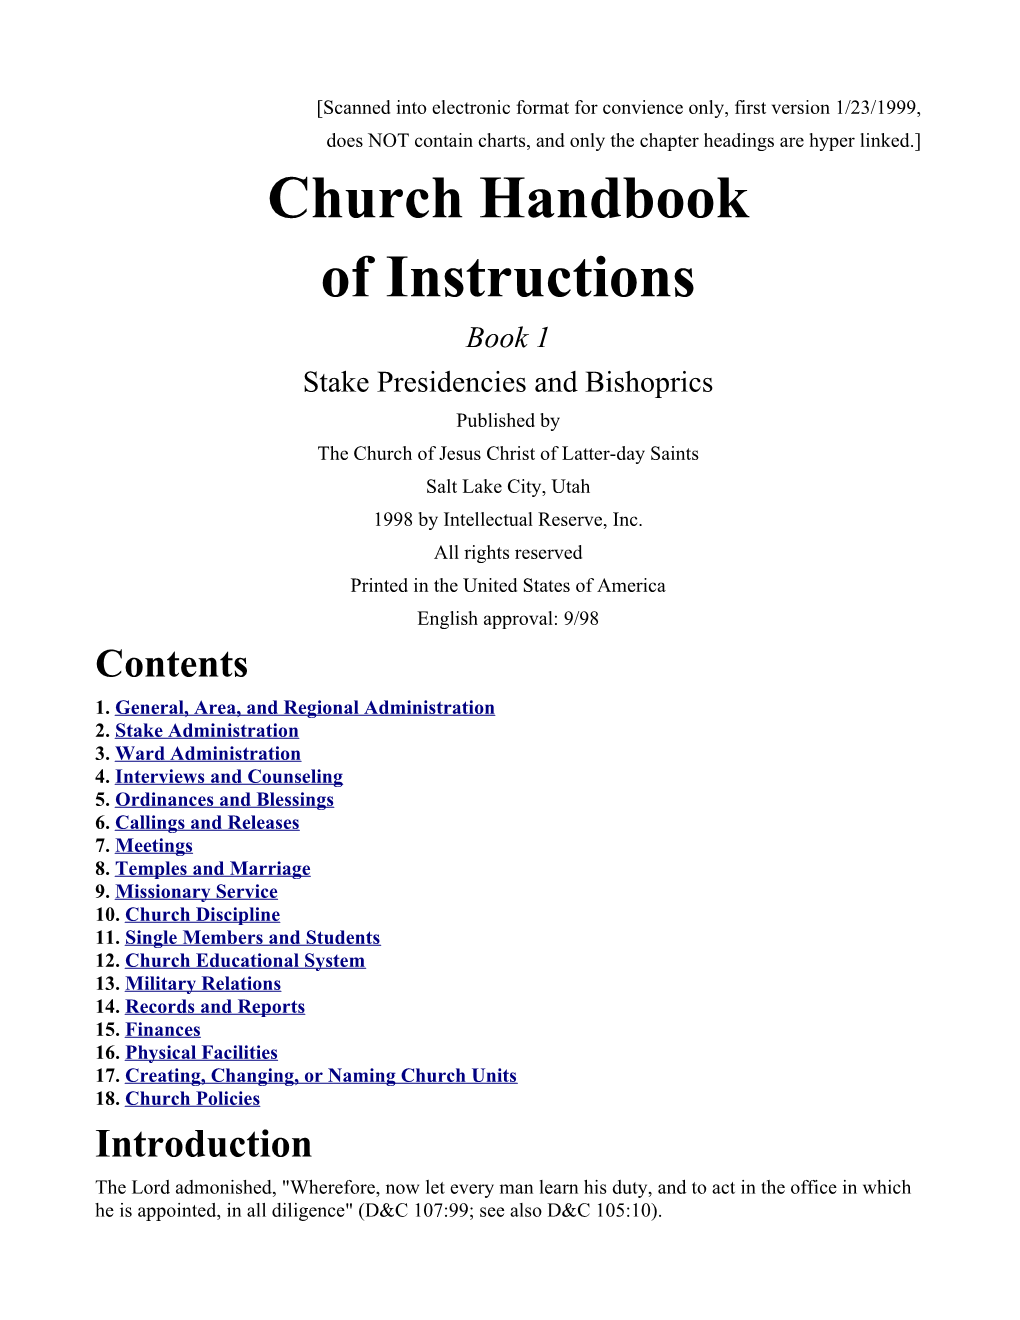 Church Handbook of Instructions